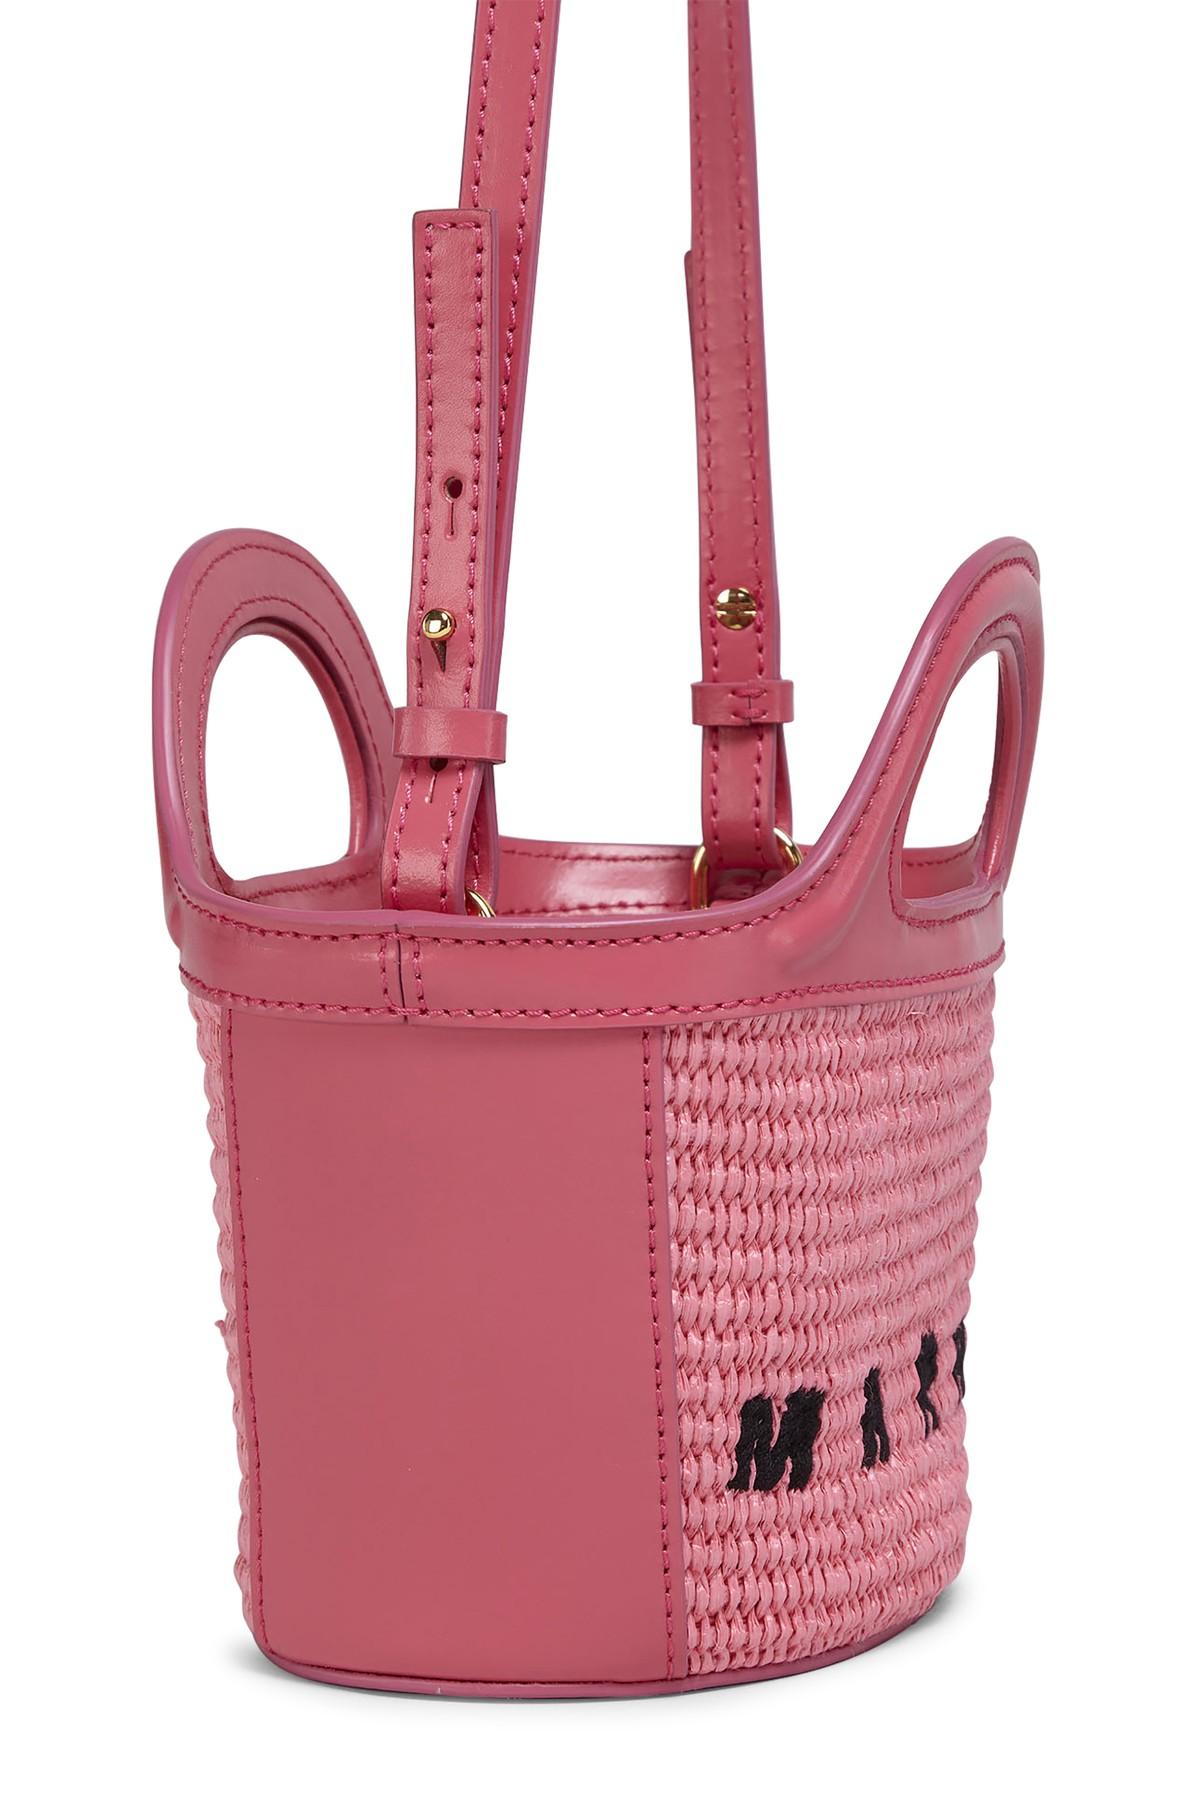 Marni Tropicalia Micro Bag In Leather And Raffia in Pink | Lyst